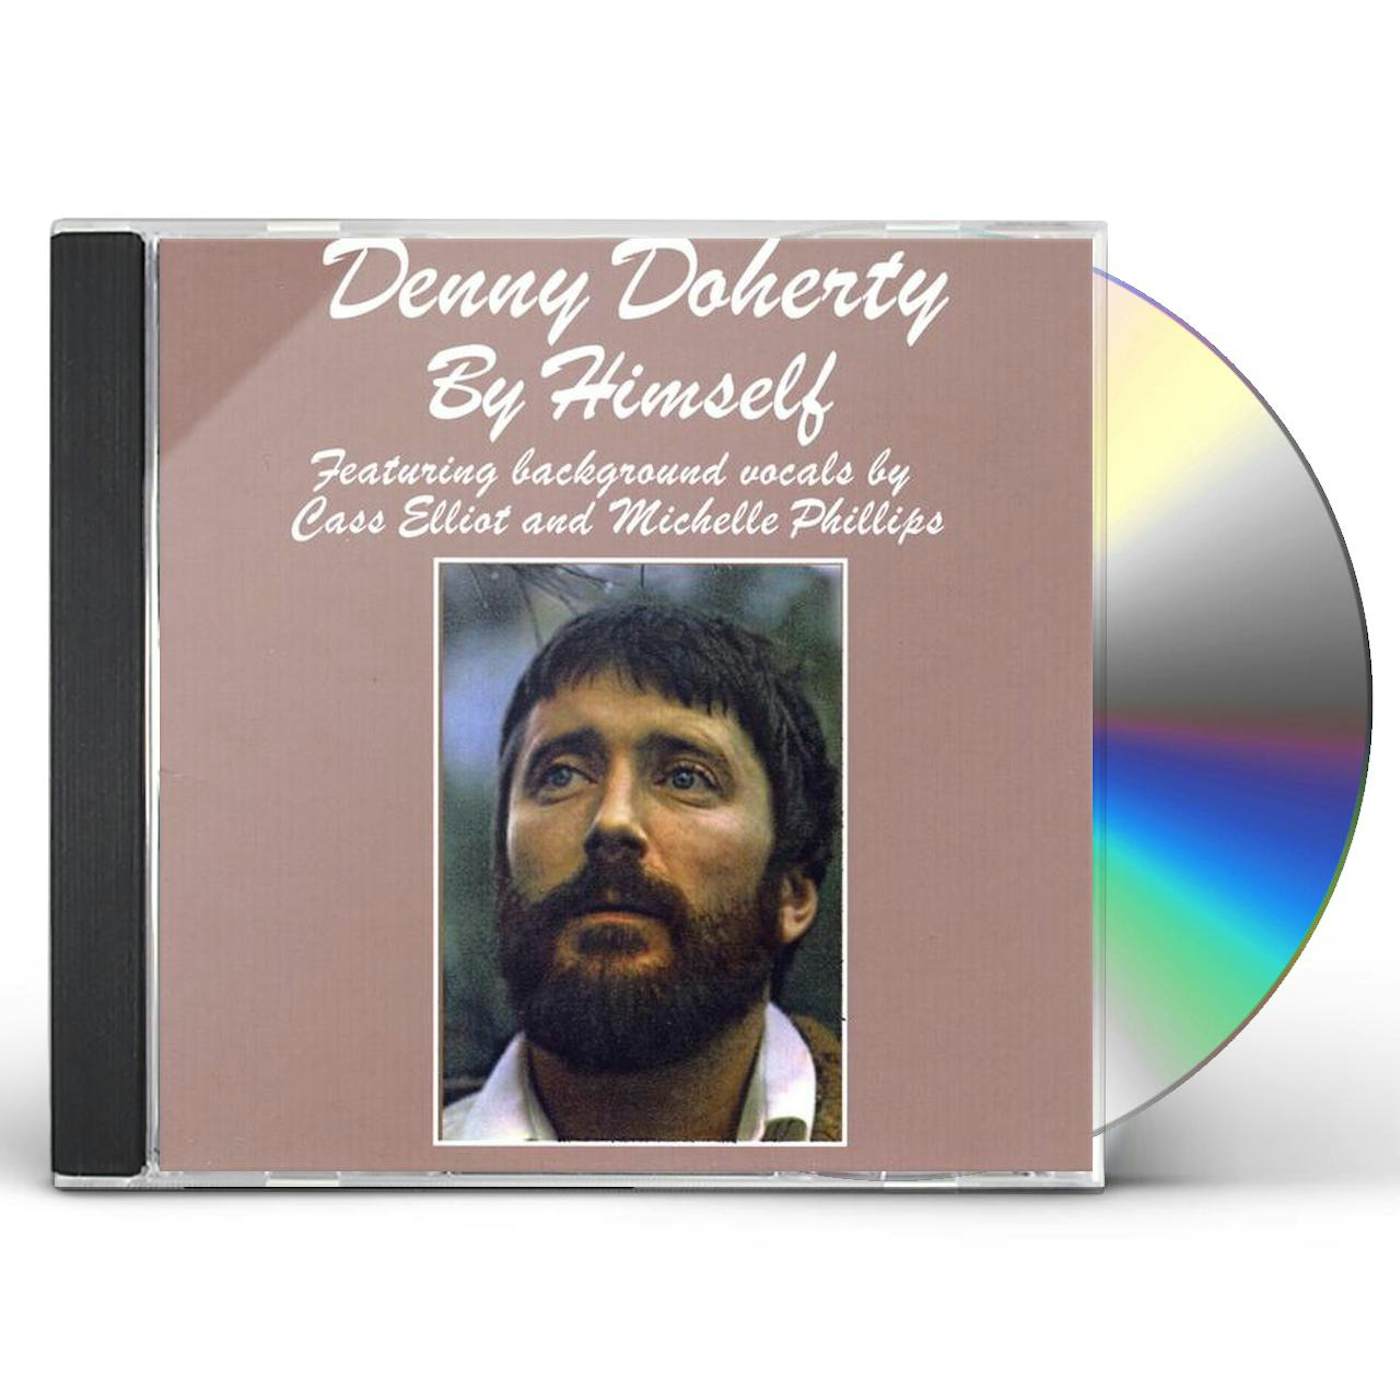 Denny Doherty BY HIMSELF CD